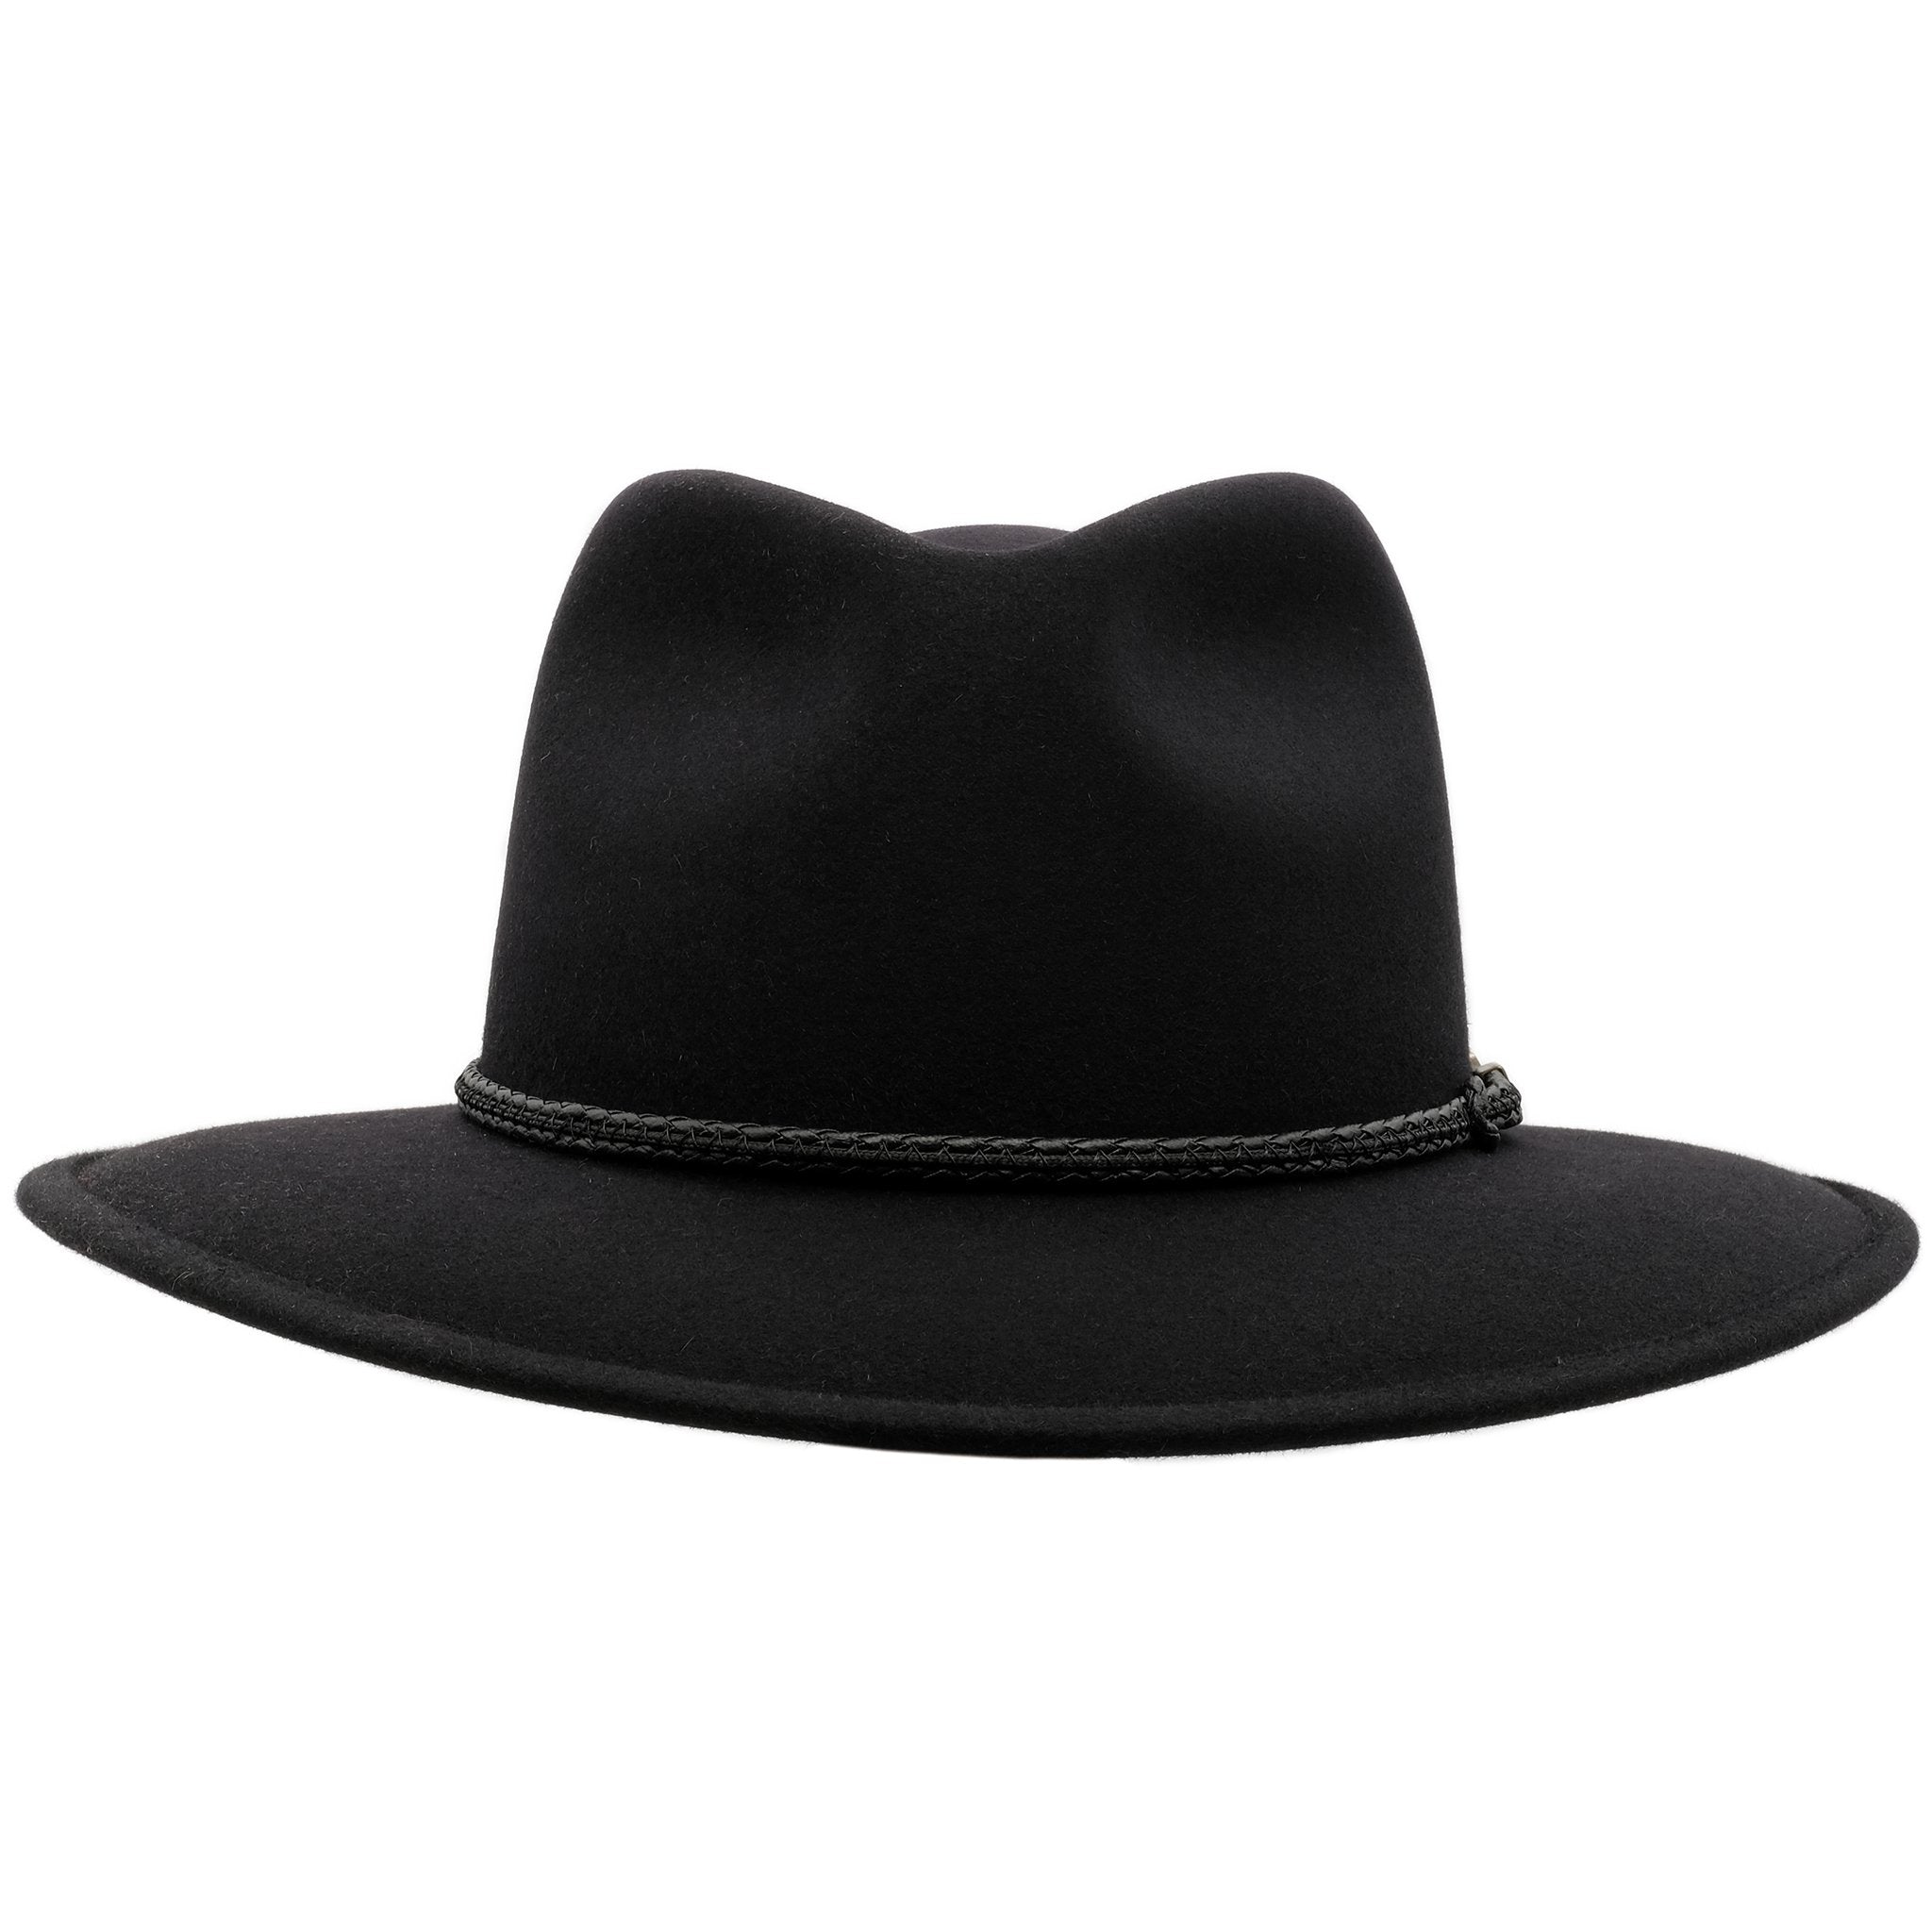 Front view of Akubra Traveller hat in black